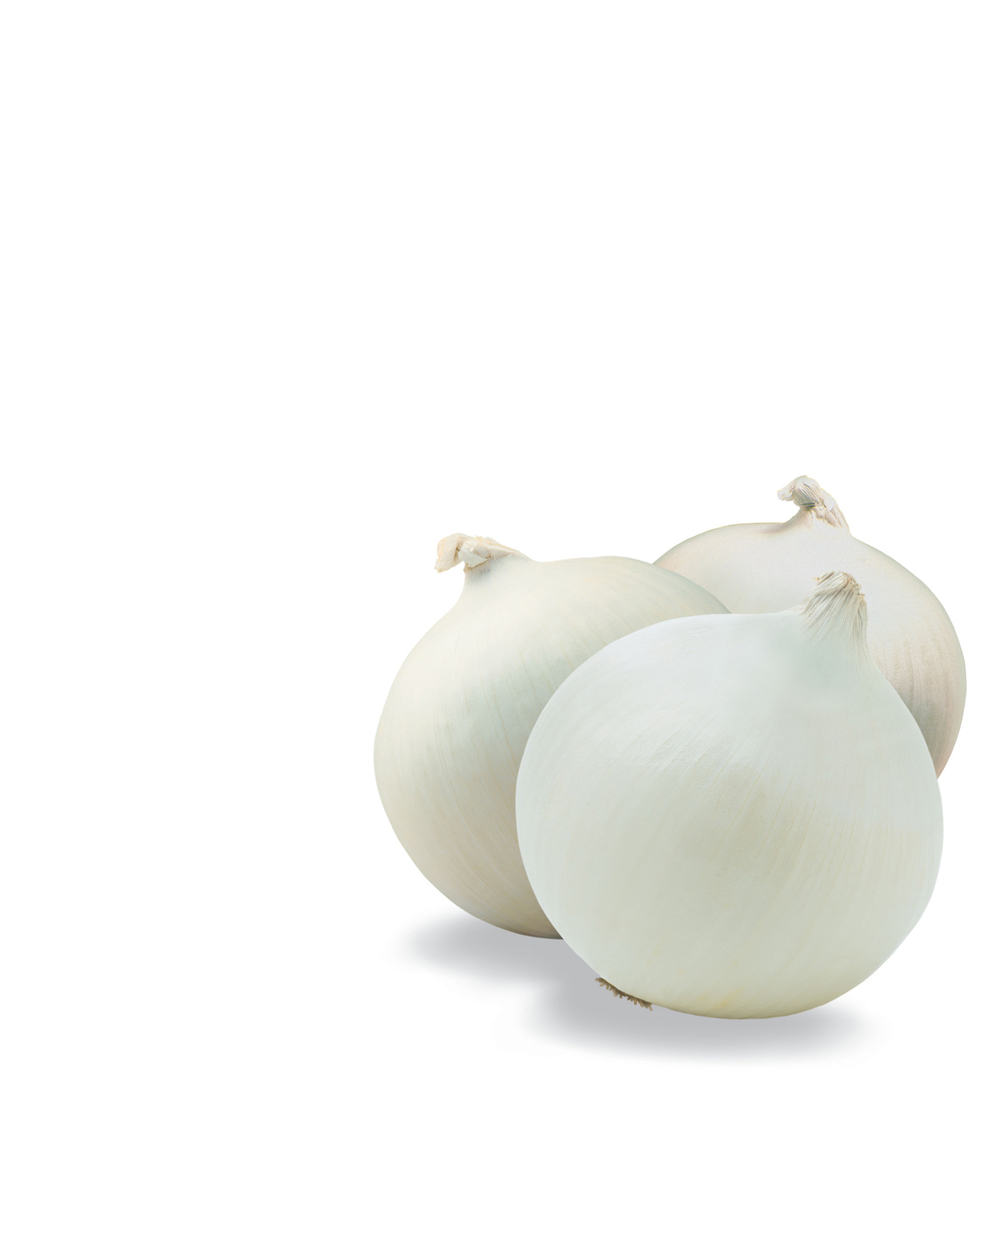 white_onions copy.jpg